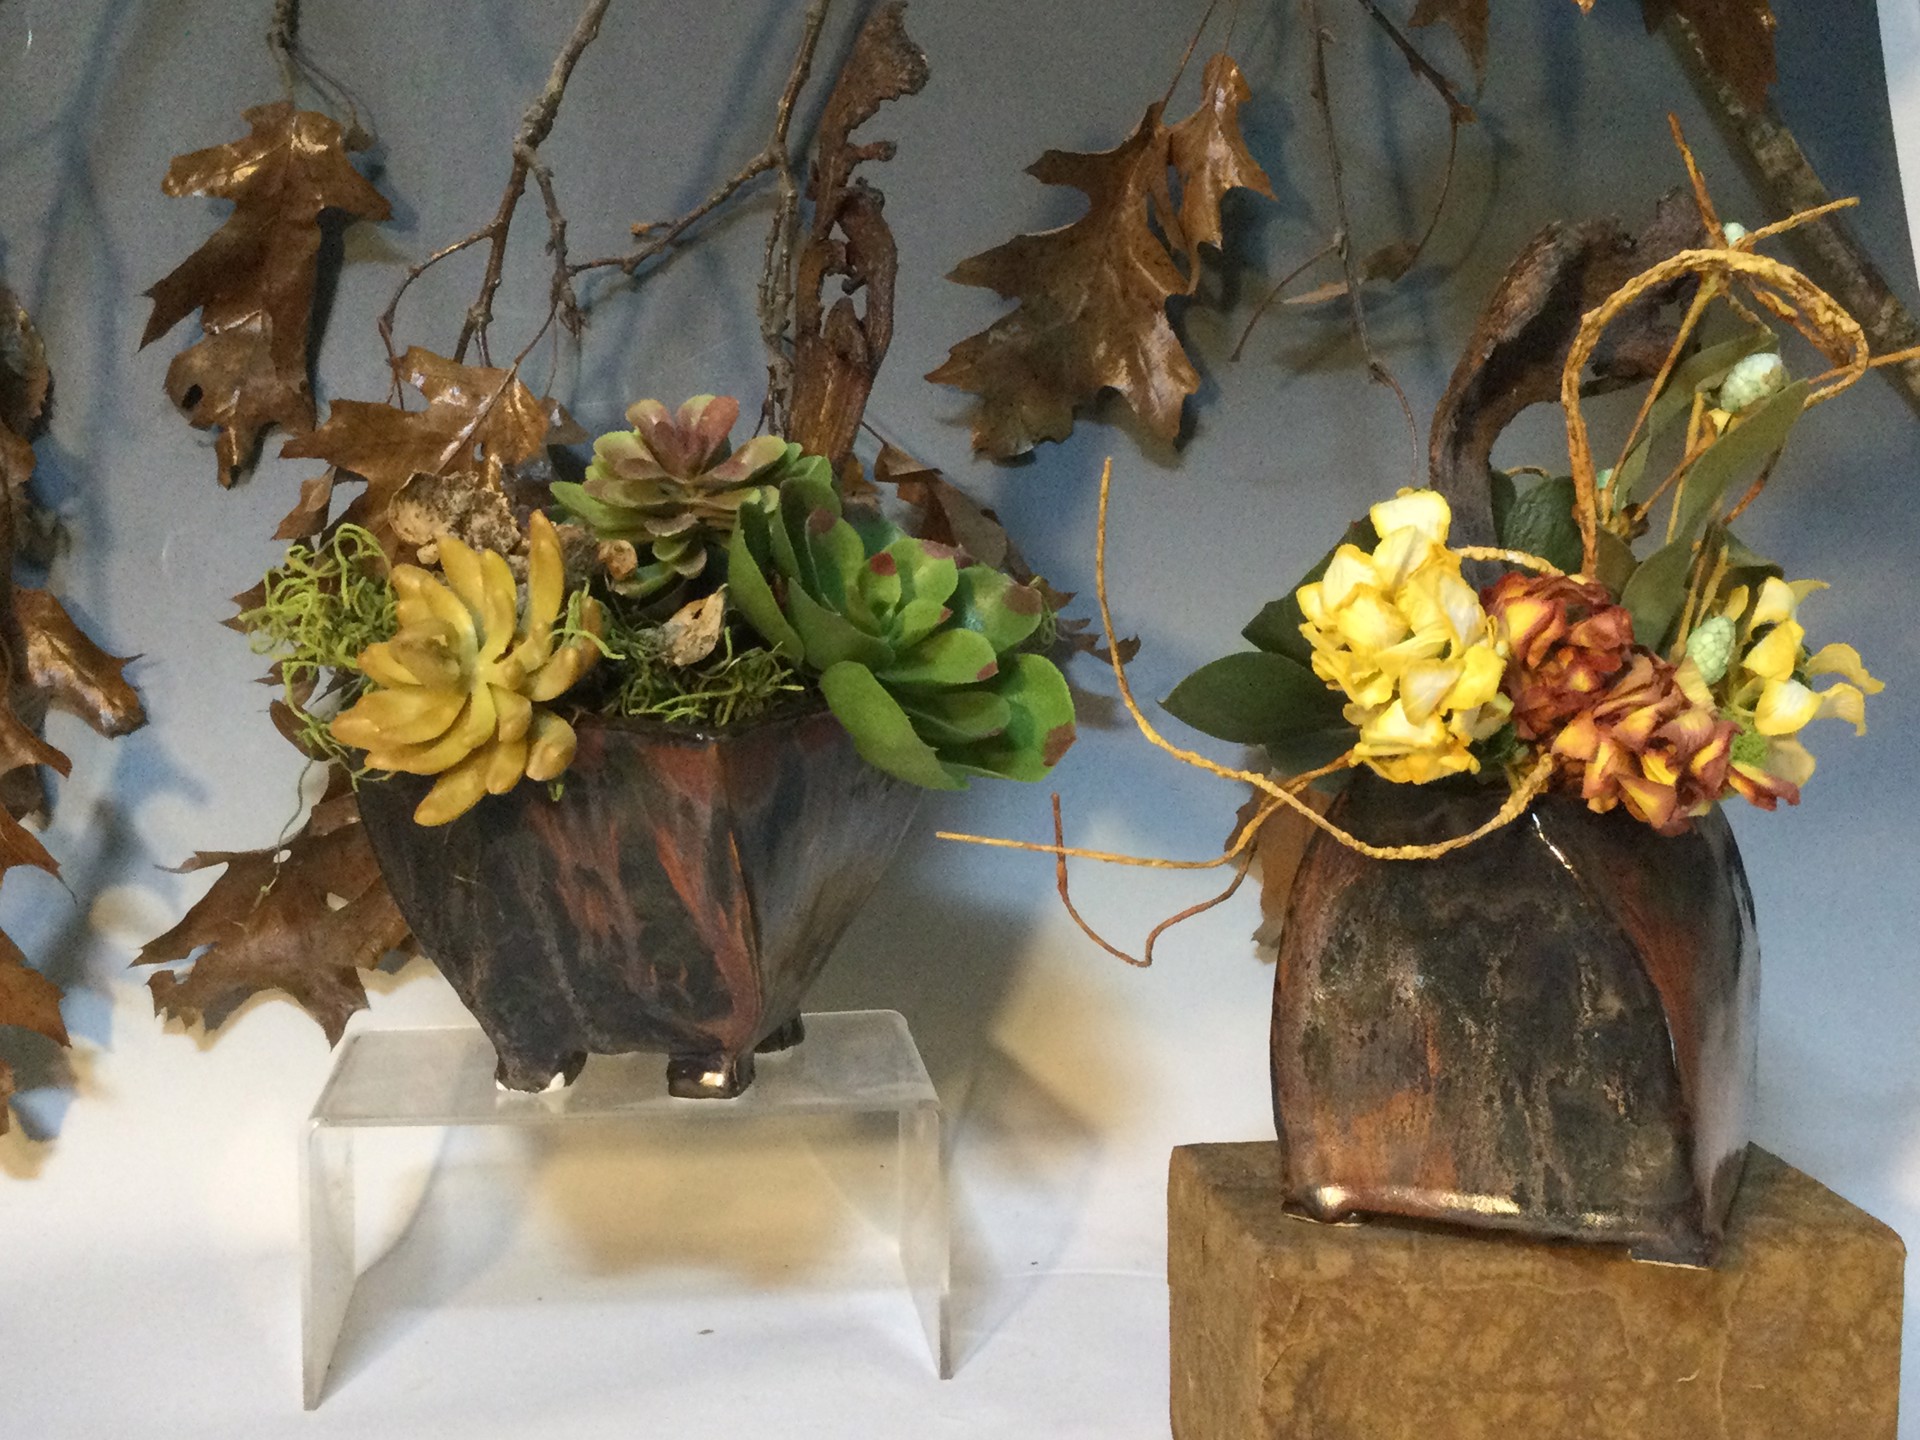 Ceramic Pot with Botanical Arrangement by Anna M. Elrod